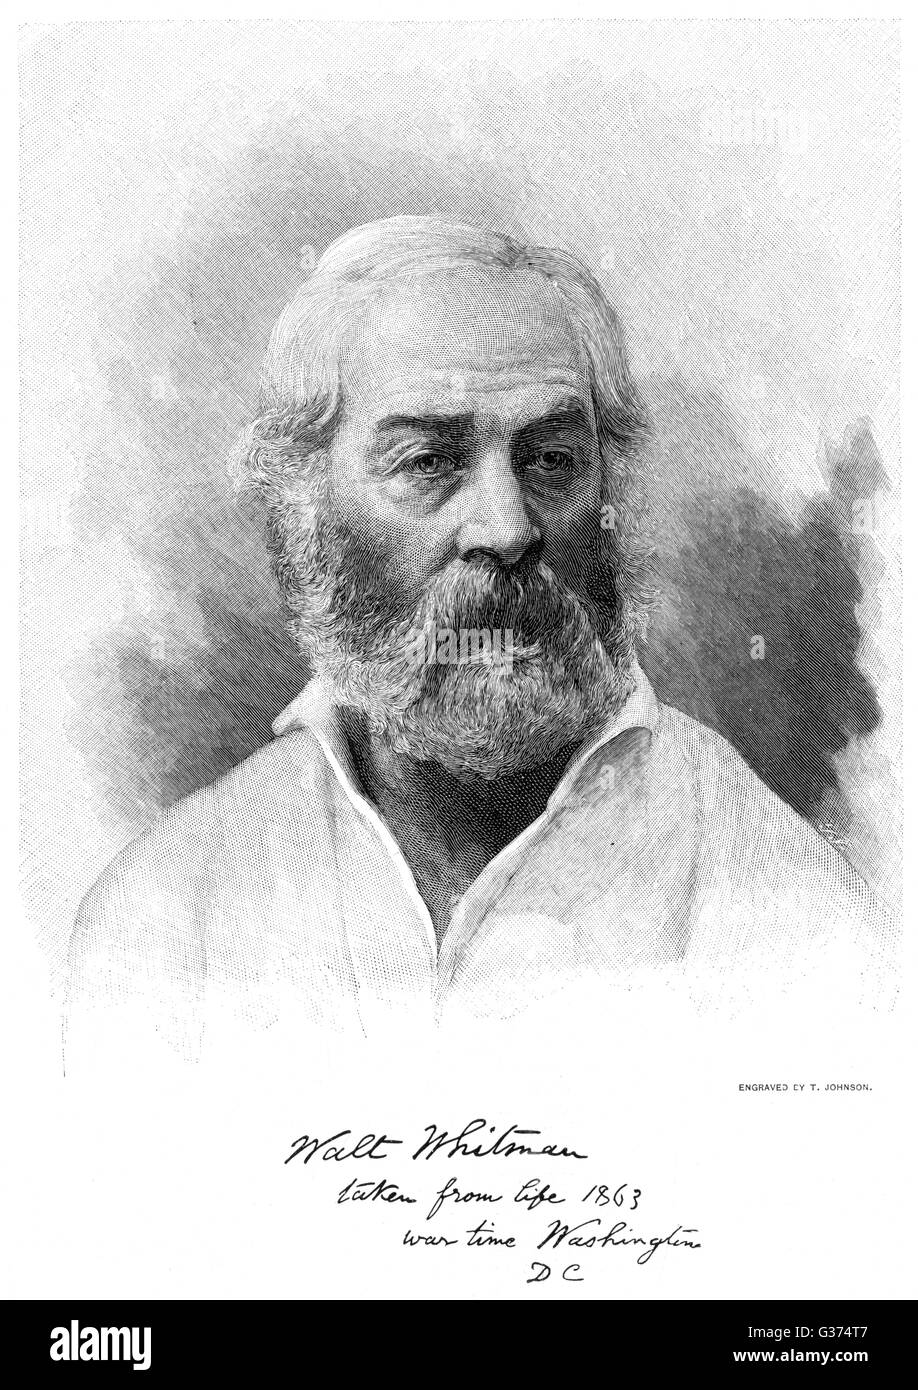 WALT WHITMAN poeta americano data: 1819 - 1892 Foto Stock